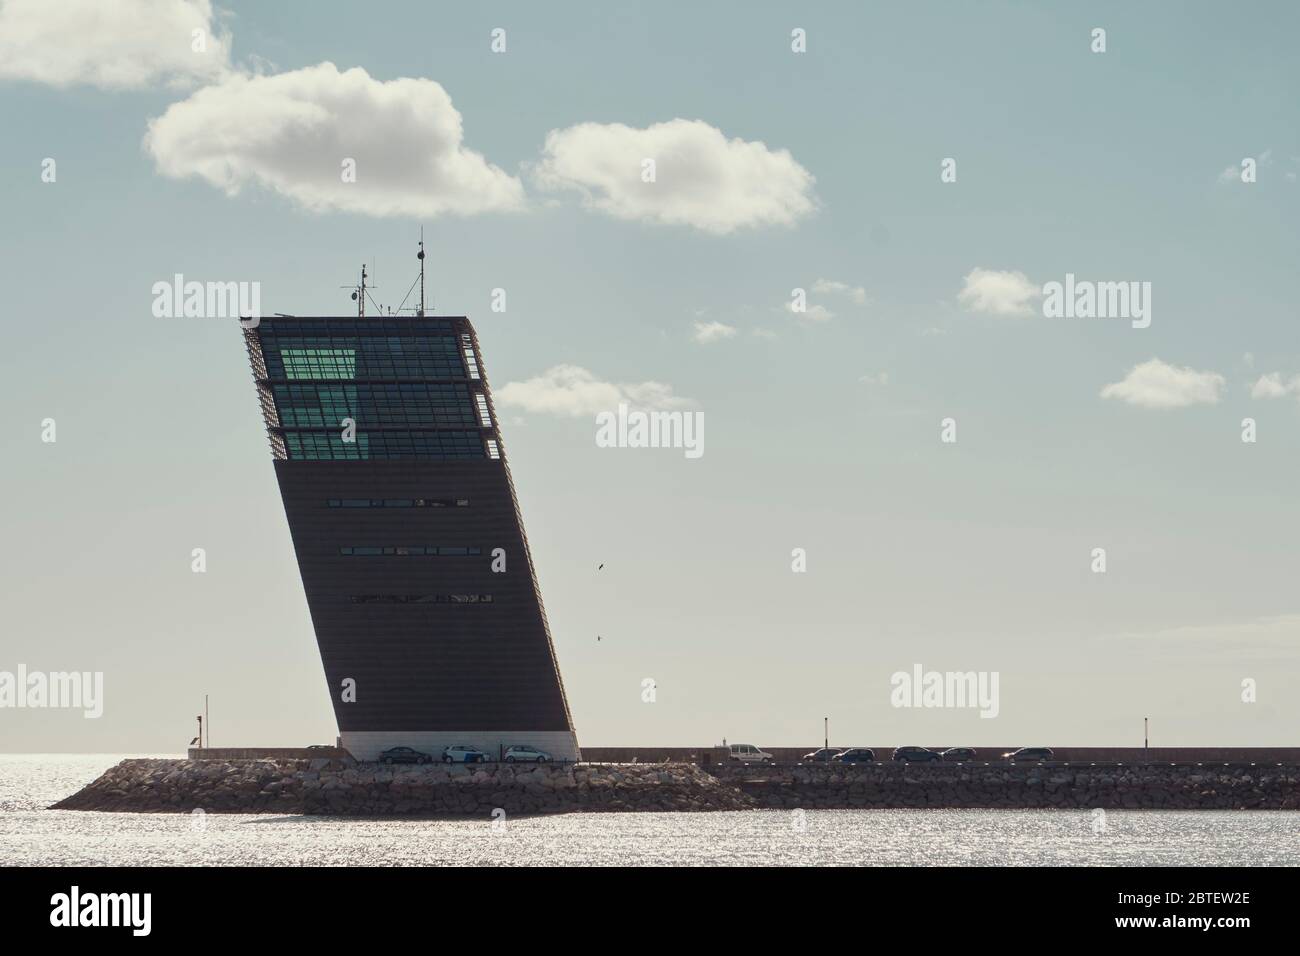 Centro de controlo e tráfego maritimo de Lisboa - Bild des Kontrollturms in Lissabon bei sonnigem Wetter Stockfoto